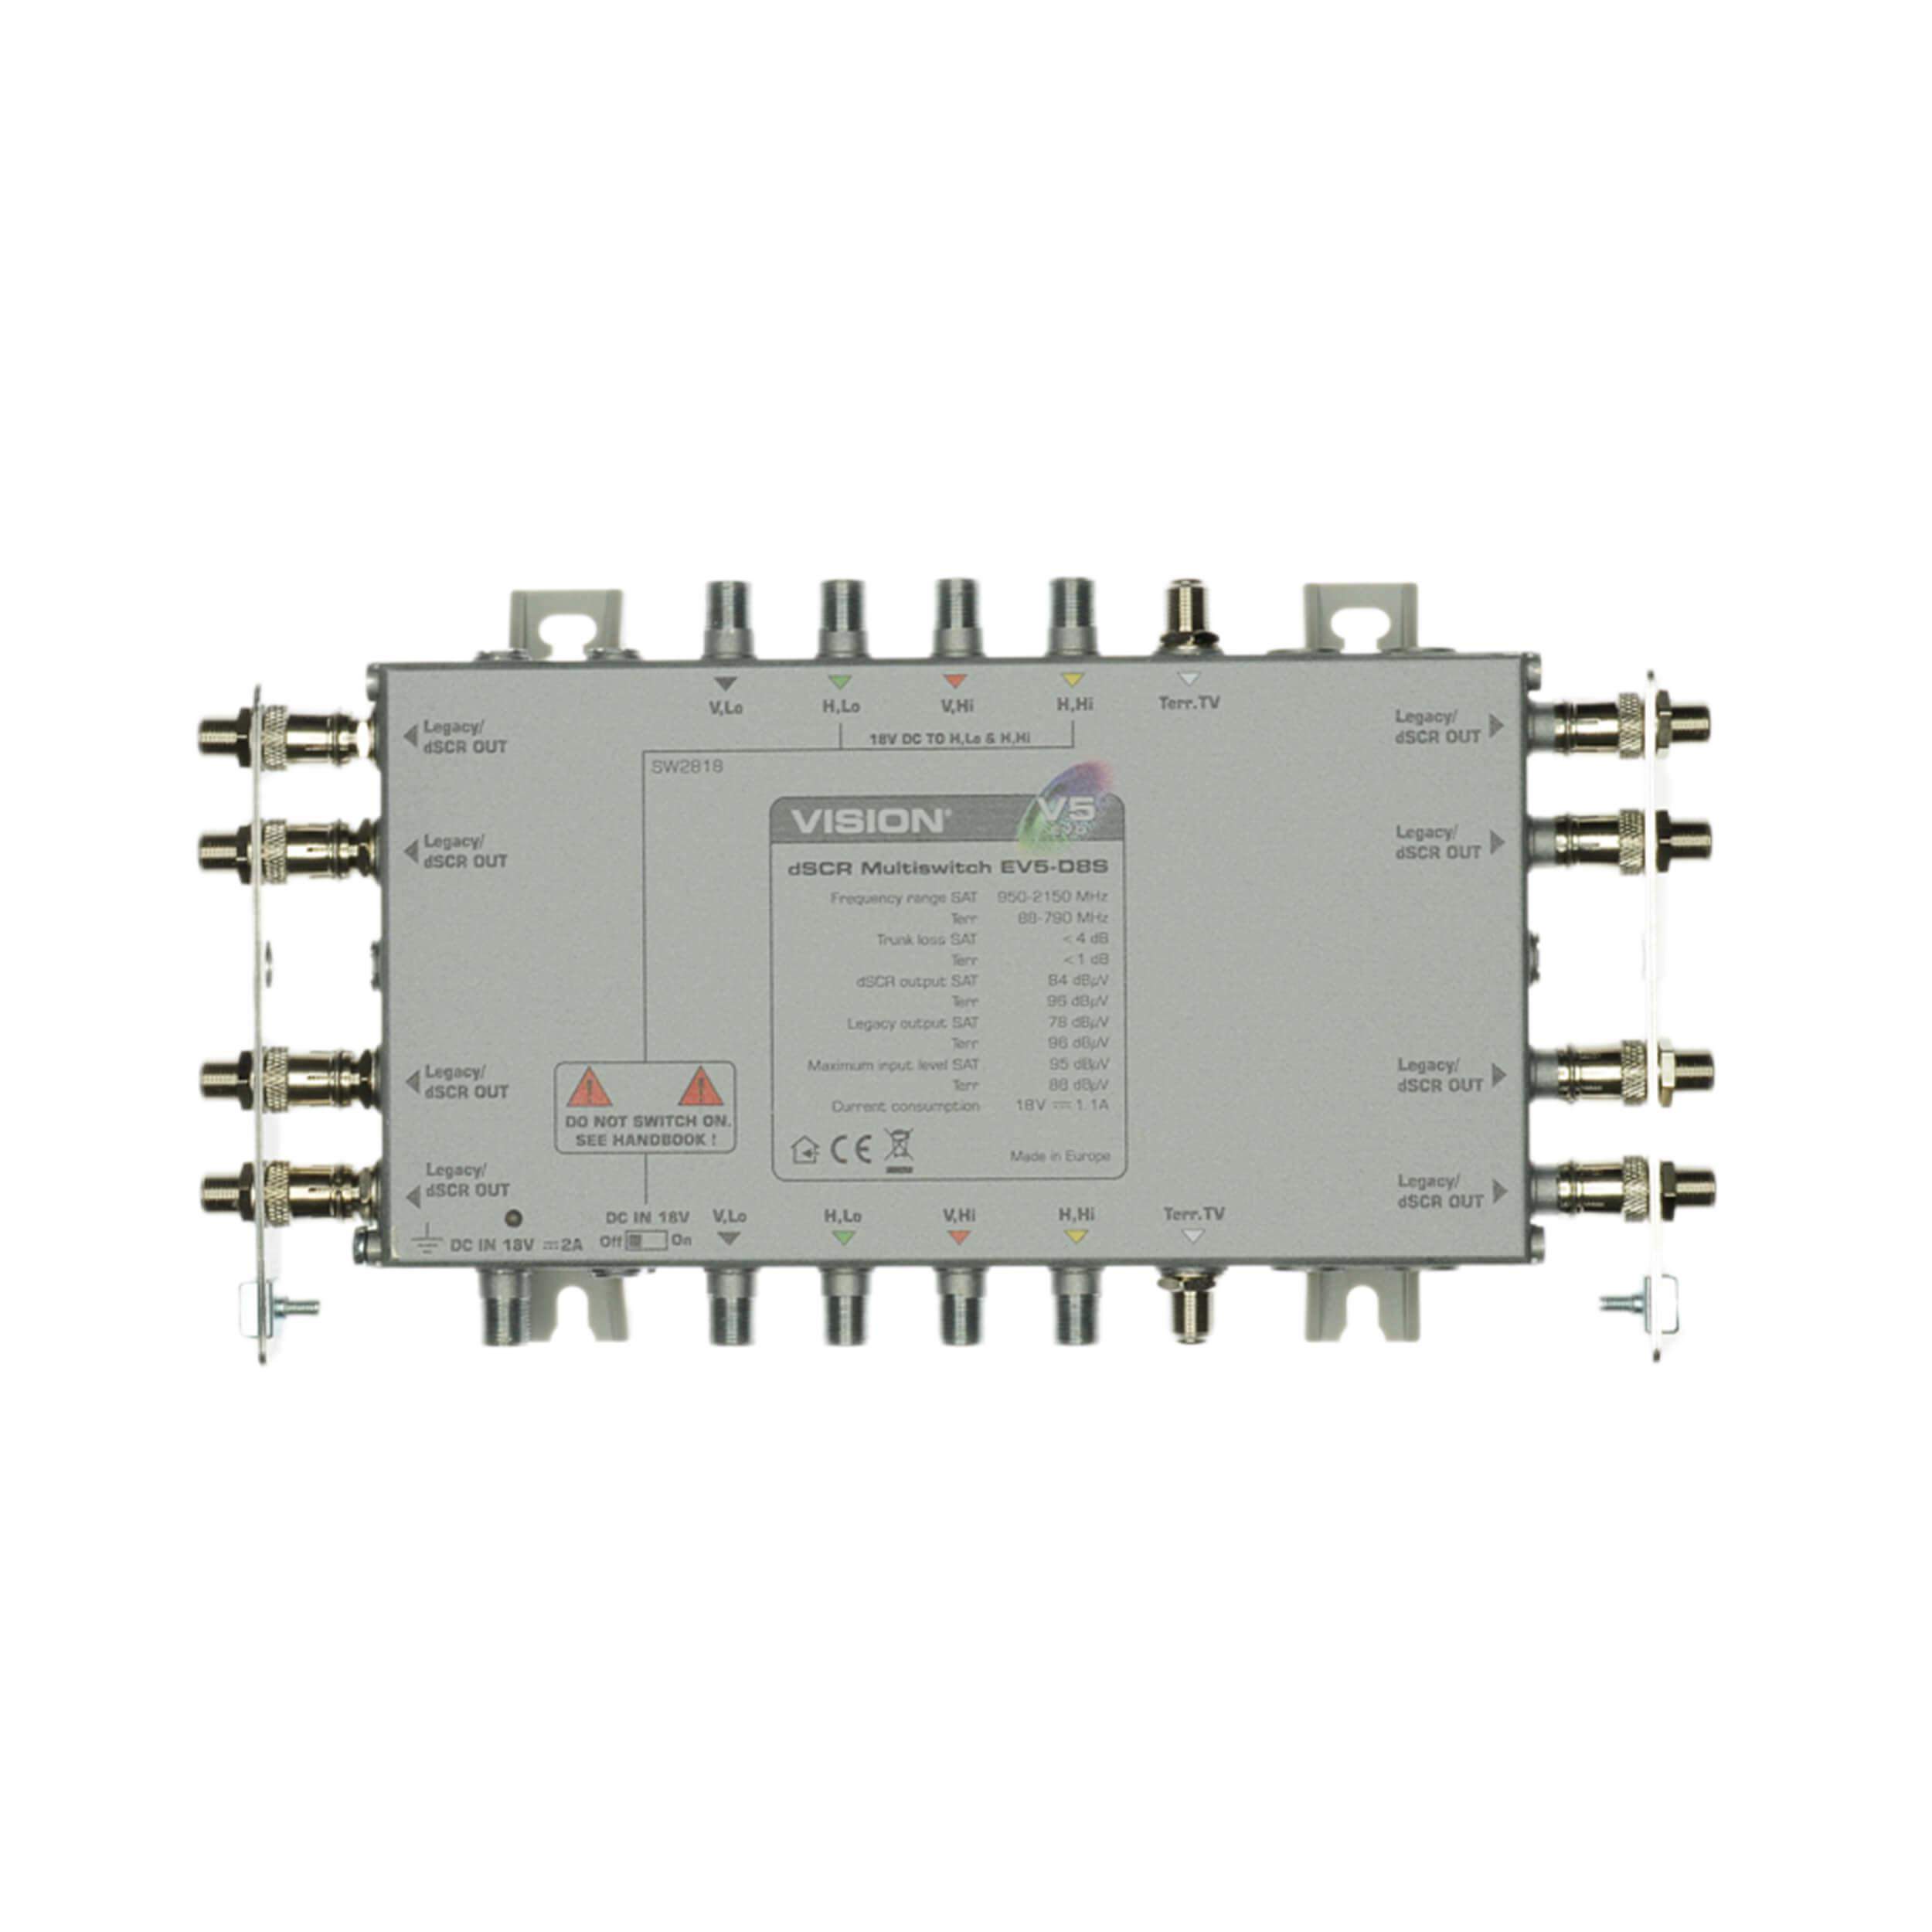 EV5-D8S 5x8 dSCR (Sky Q) Switch - Add to IRS or Stand Alone. Line Powered